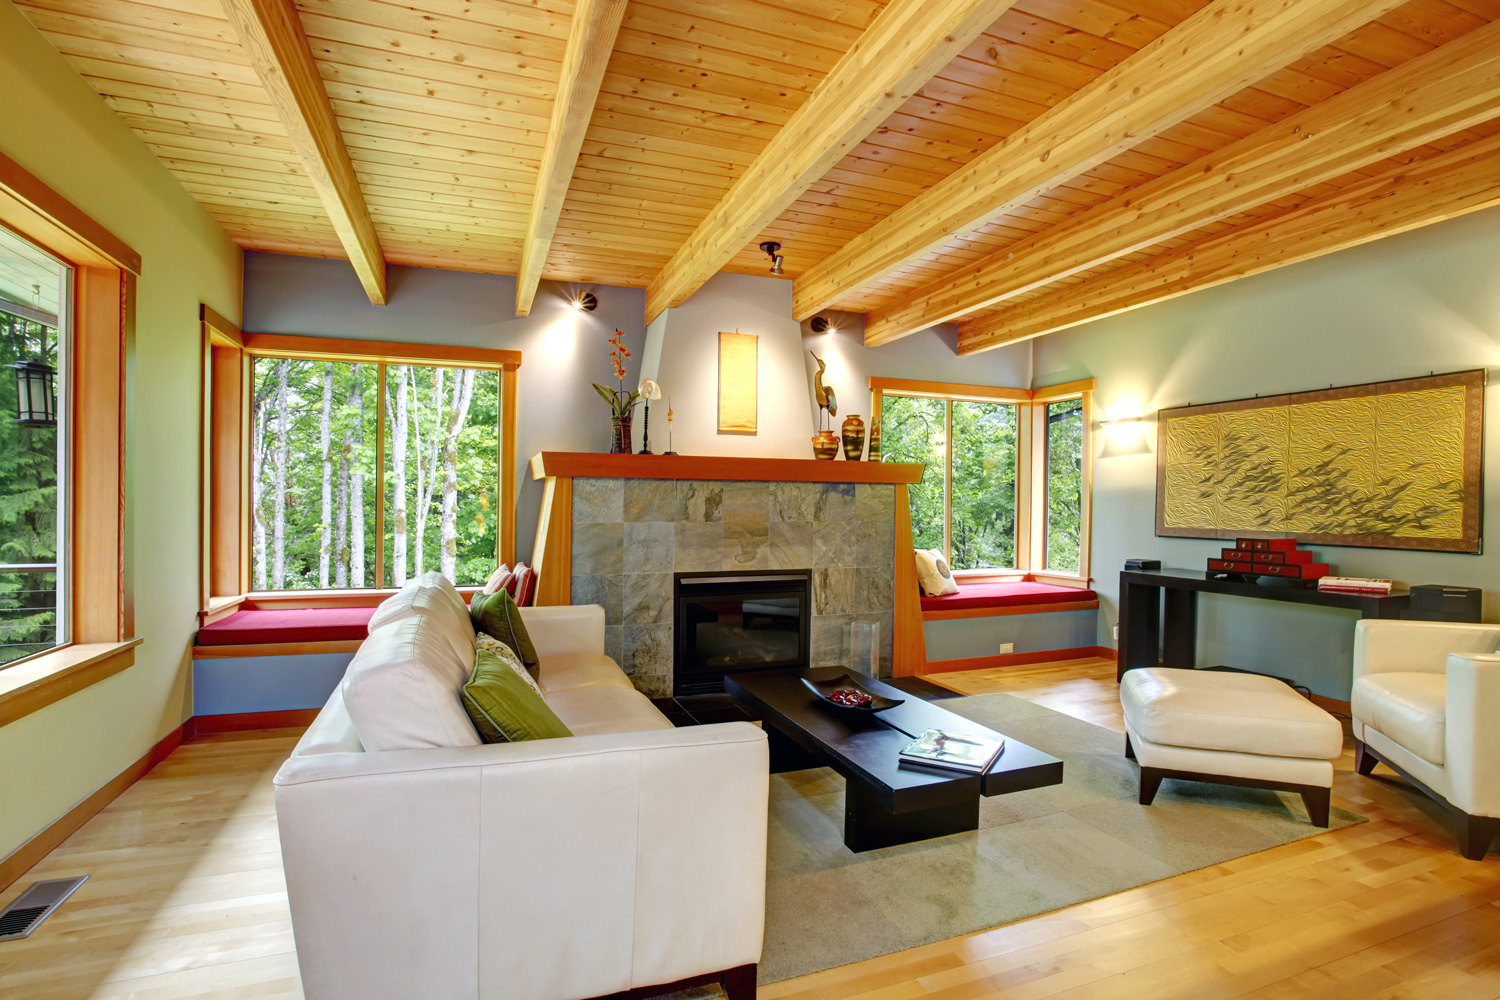 Blend of log cabin interior with elegant black and white furniture.